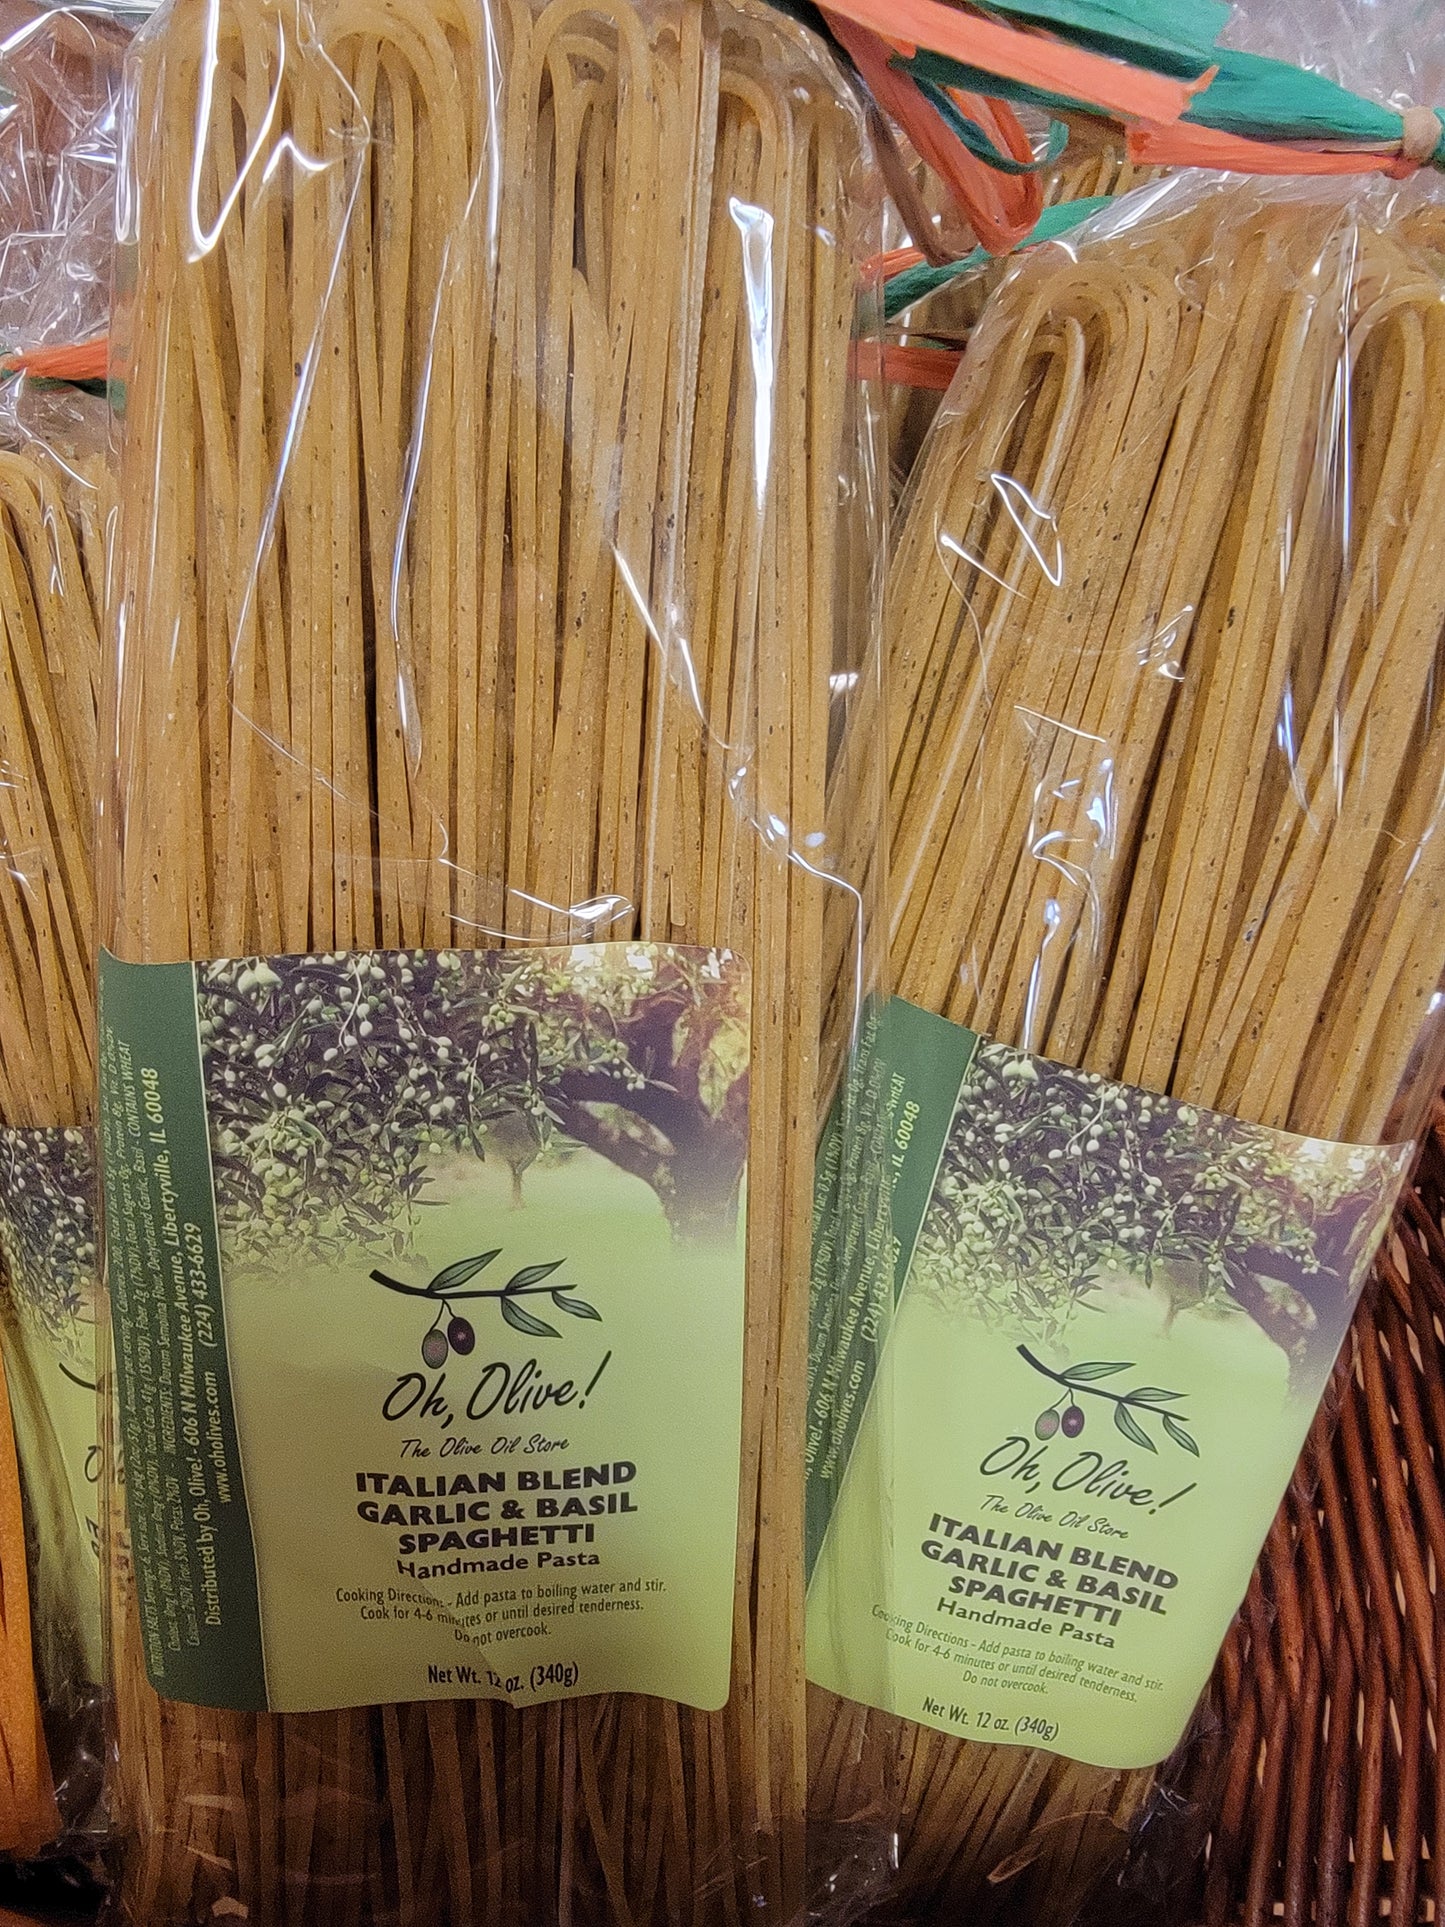 Italian Blend Garlic & Basil Spaghetti Gourmet Pasta